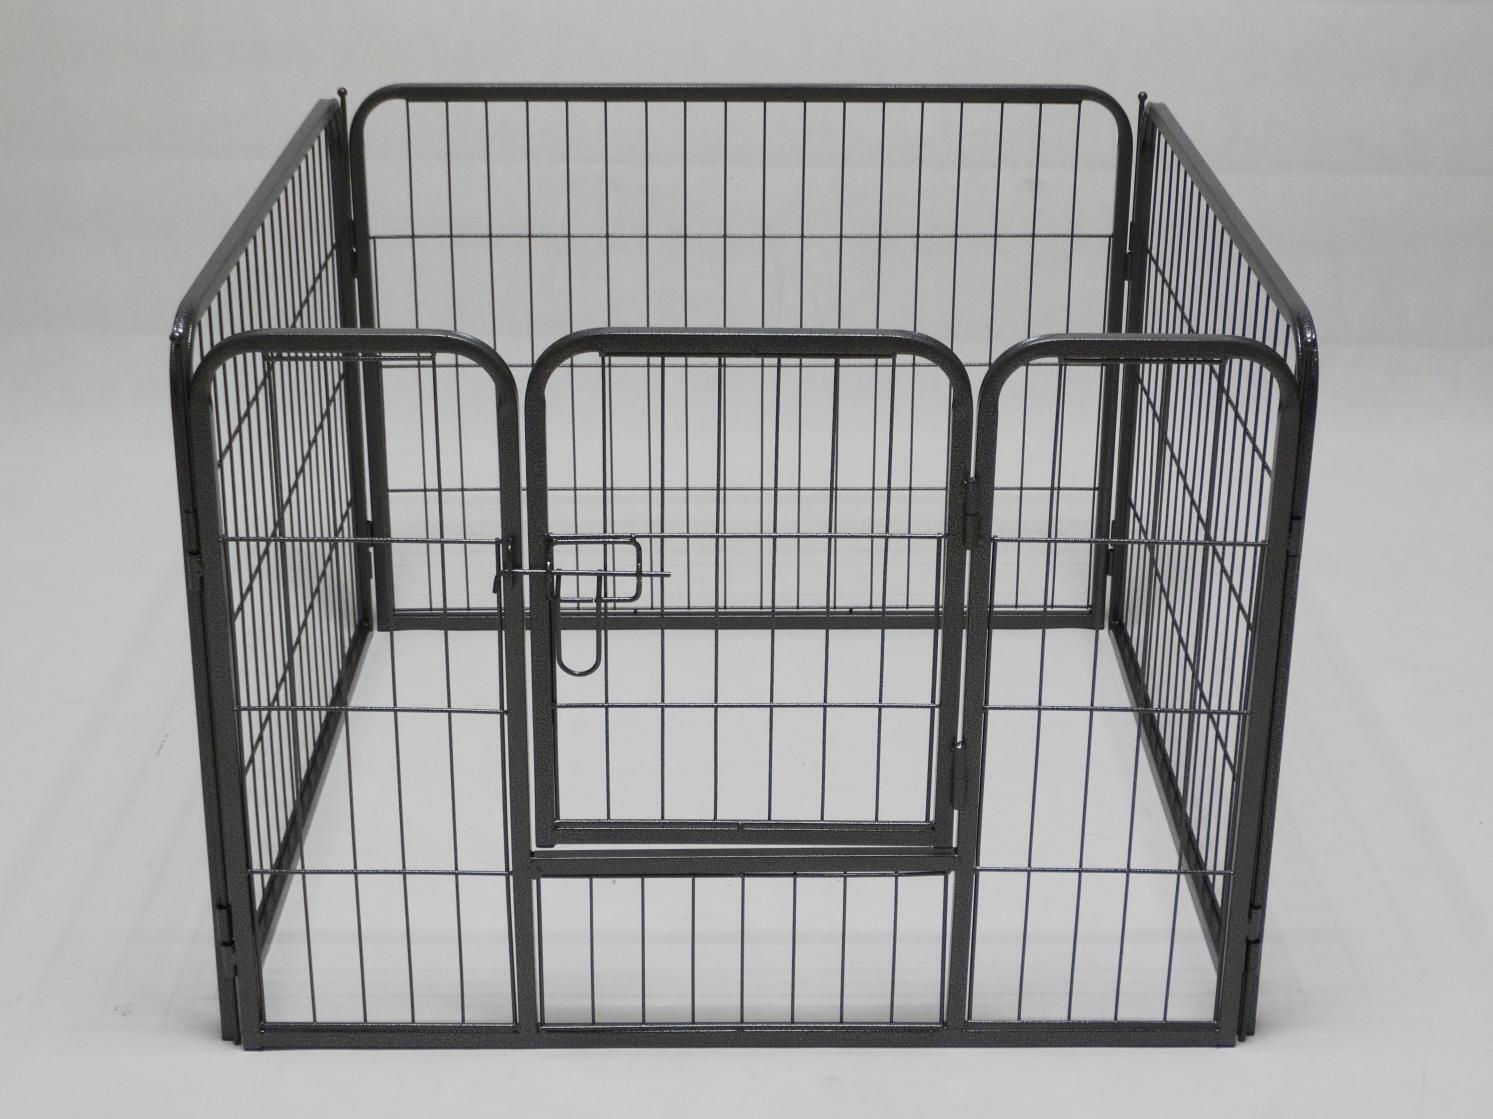 4 Panel 80 cm Heavy Duty Pet Dog Puppy Cat Rabbit Exercise Playpen Fence Extension